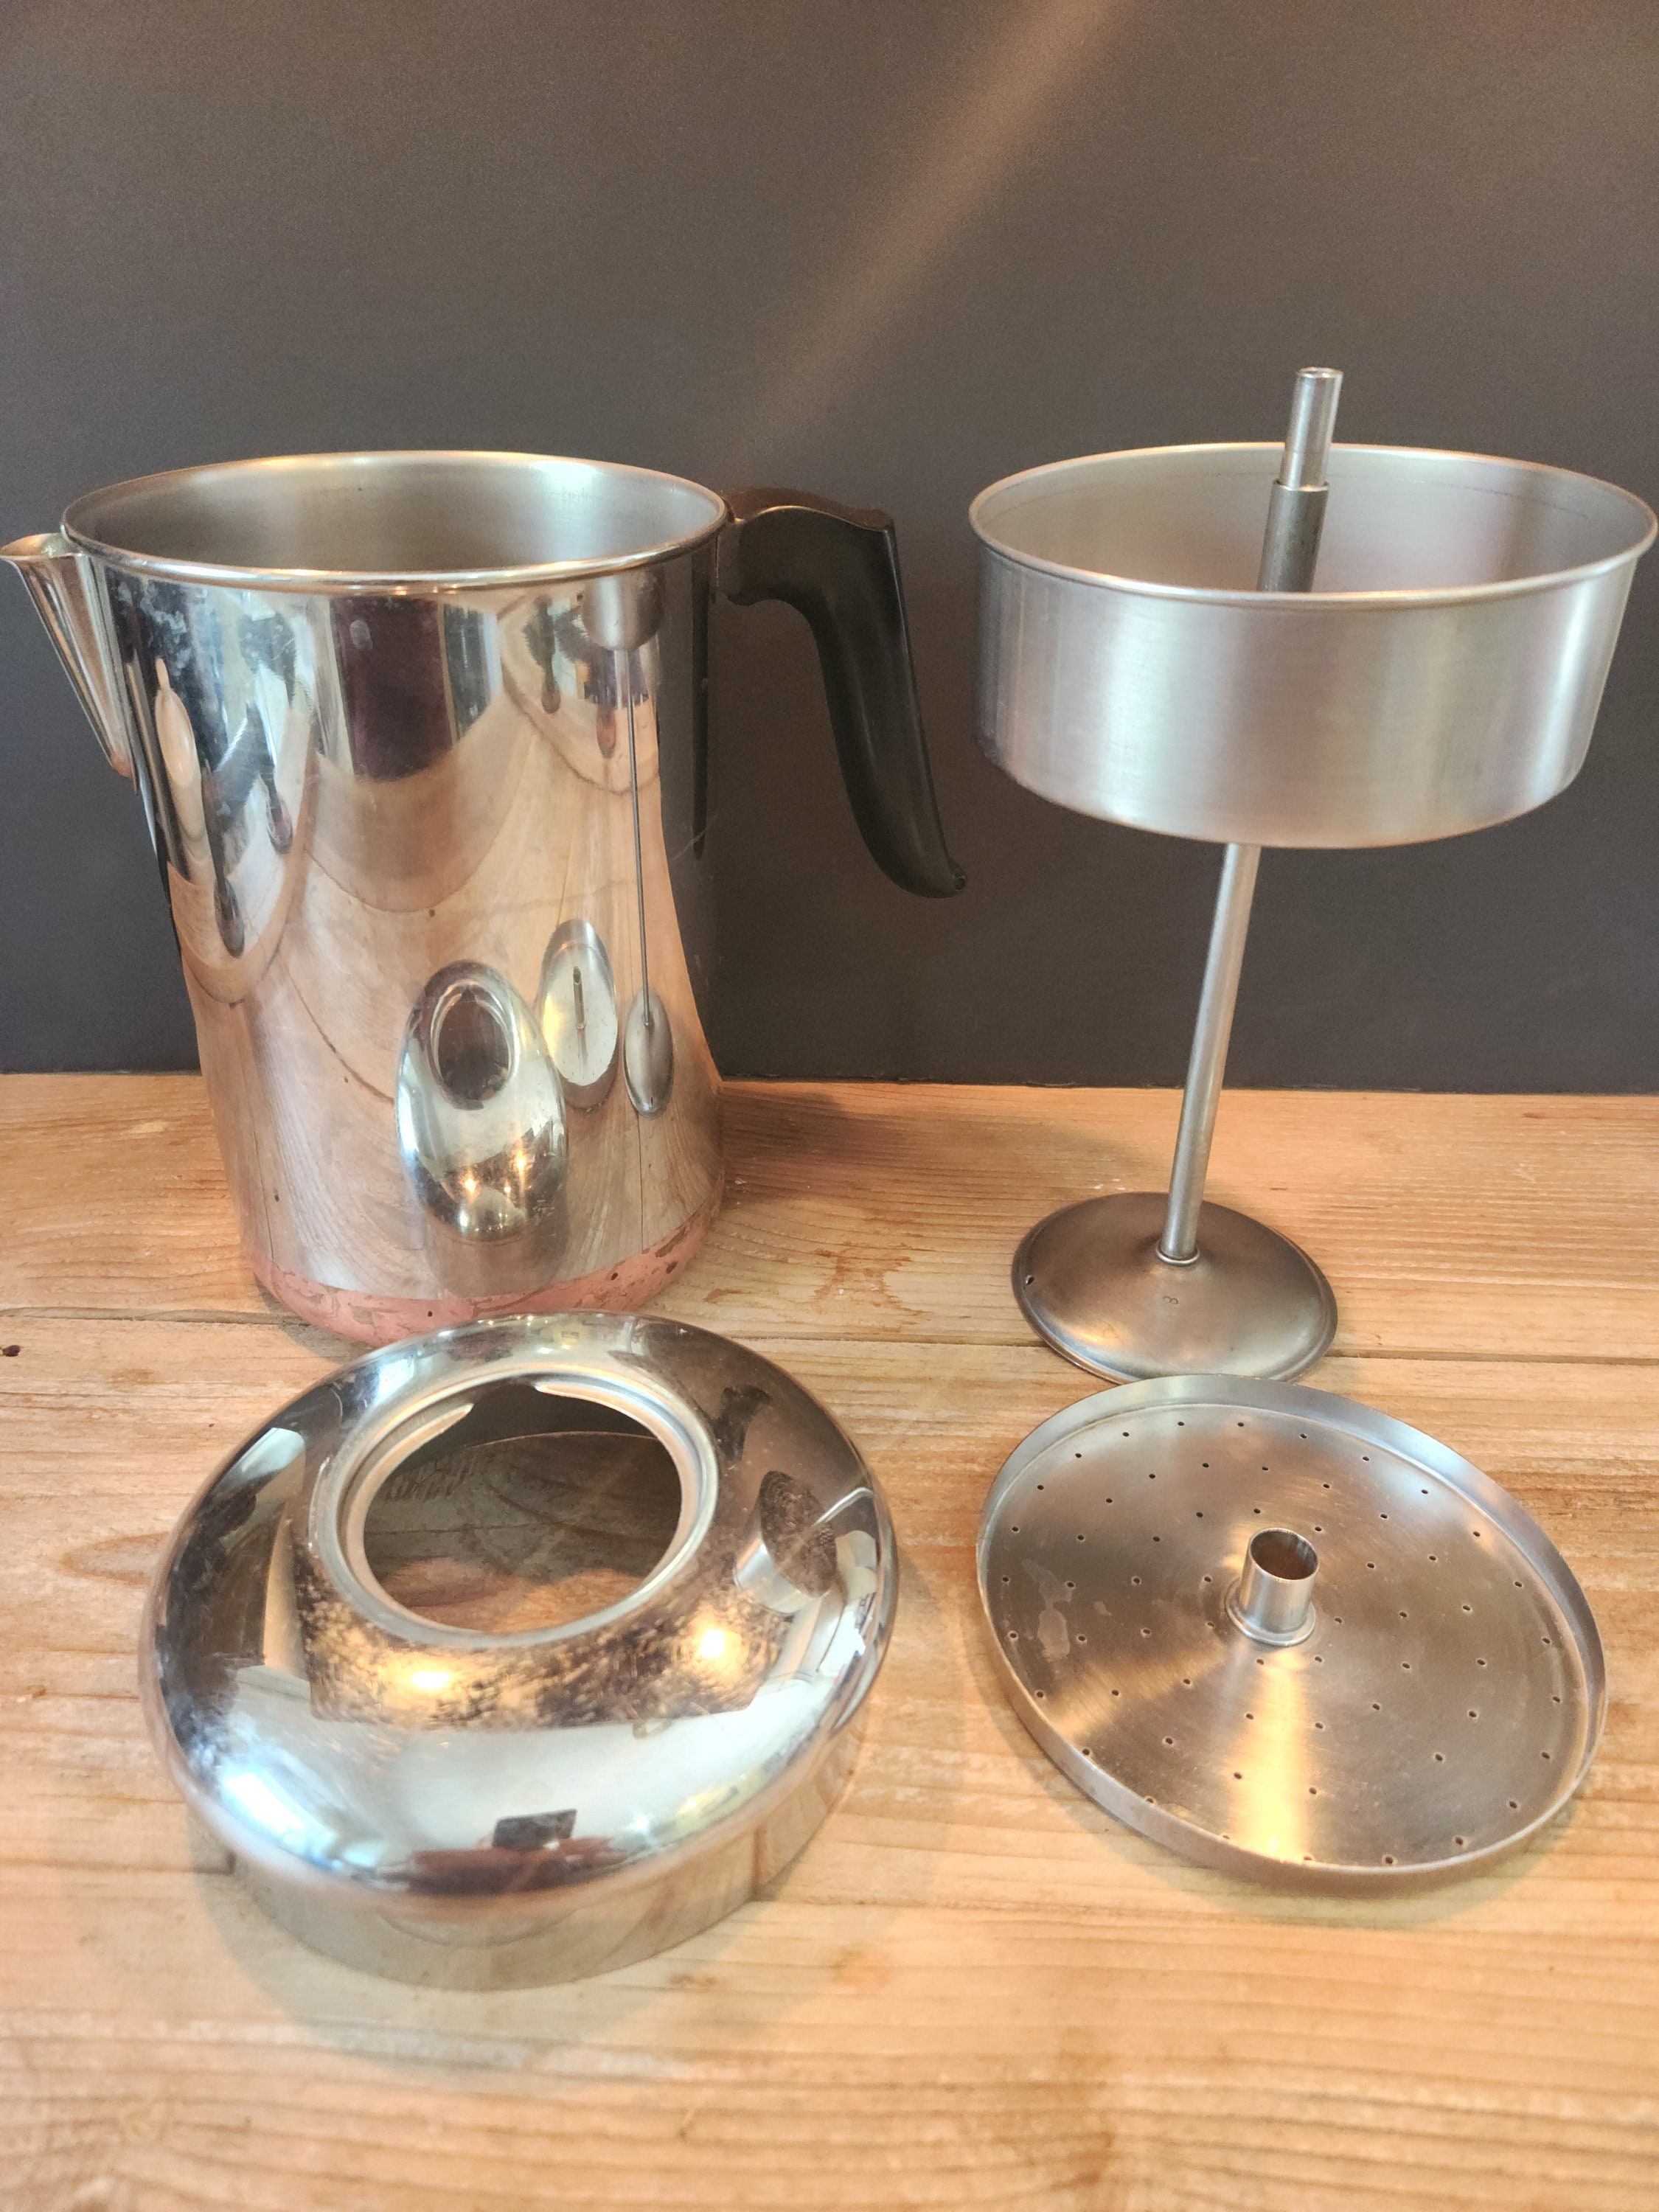 Wooden cookware handles? - Revere Ware Parts